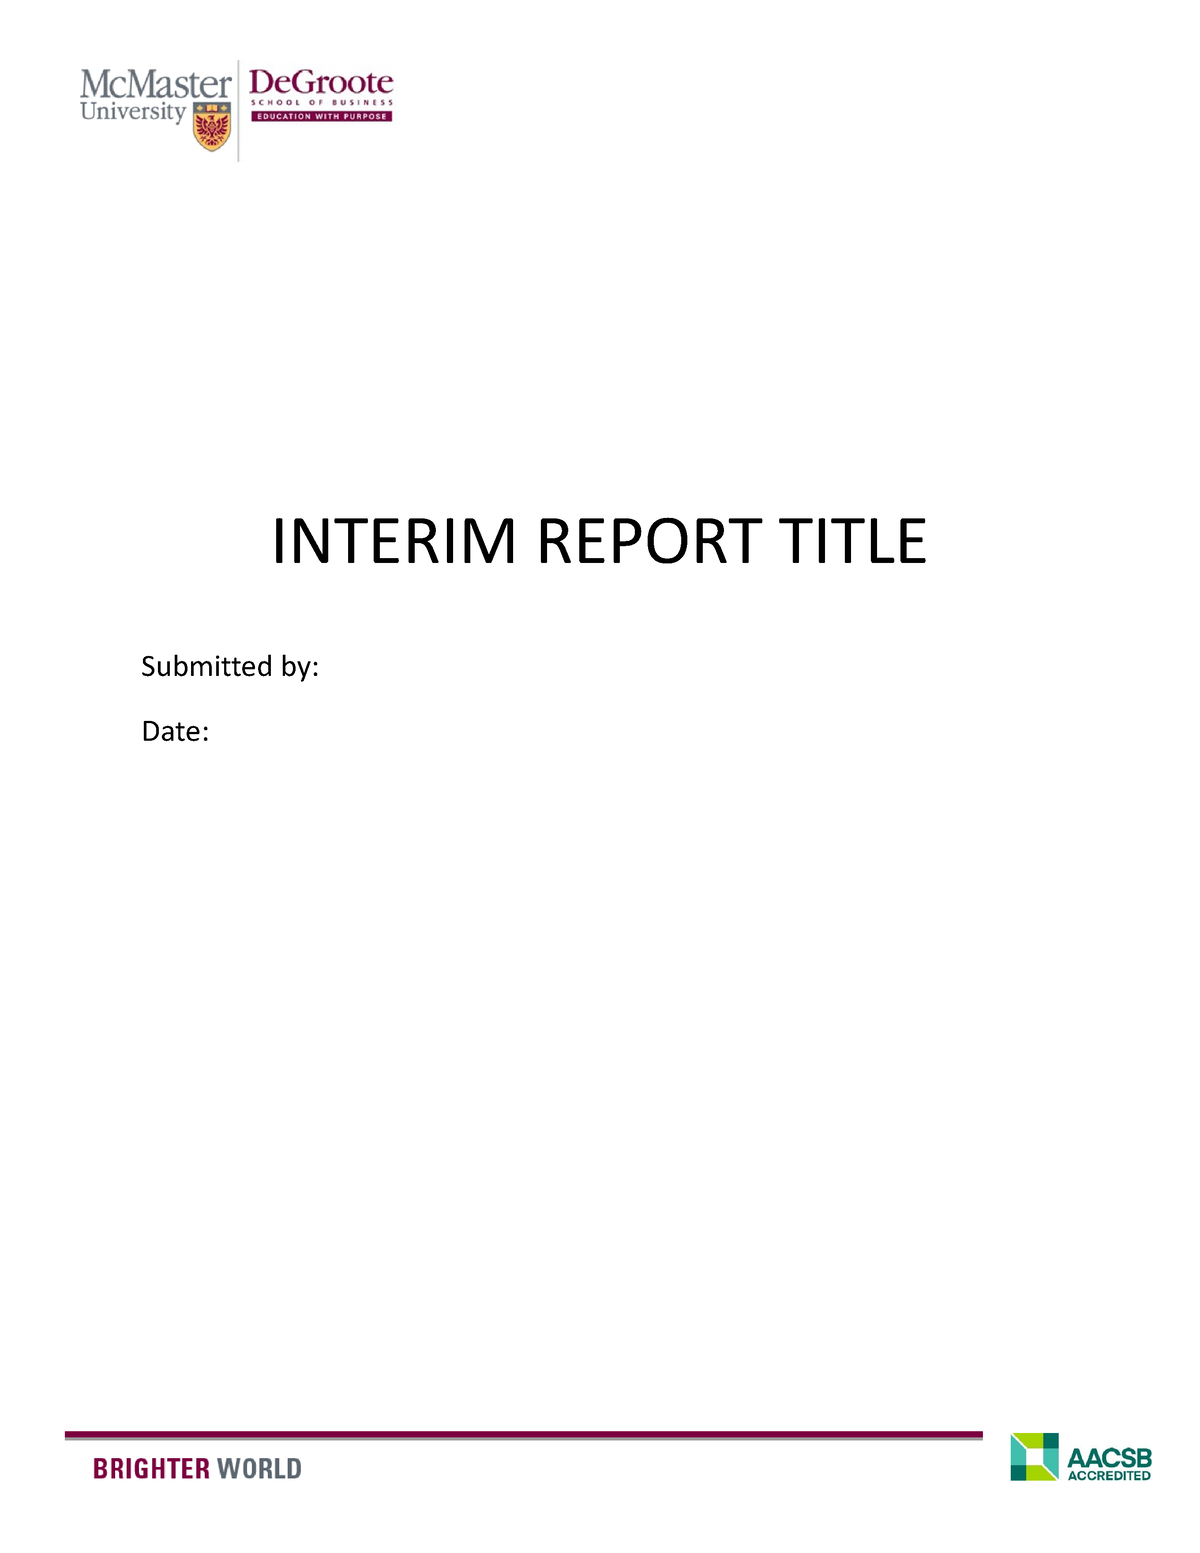 dissertation interim report template